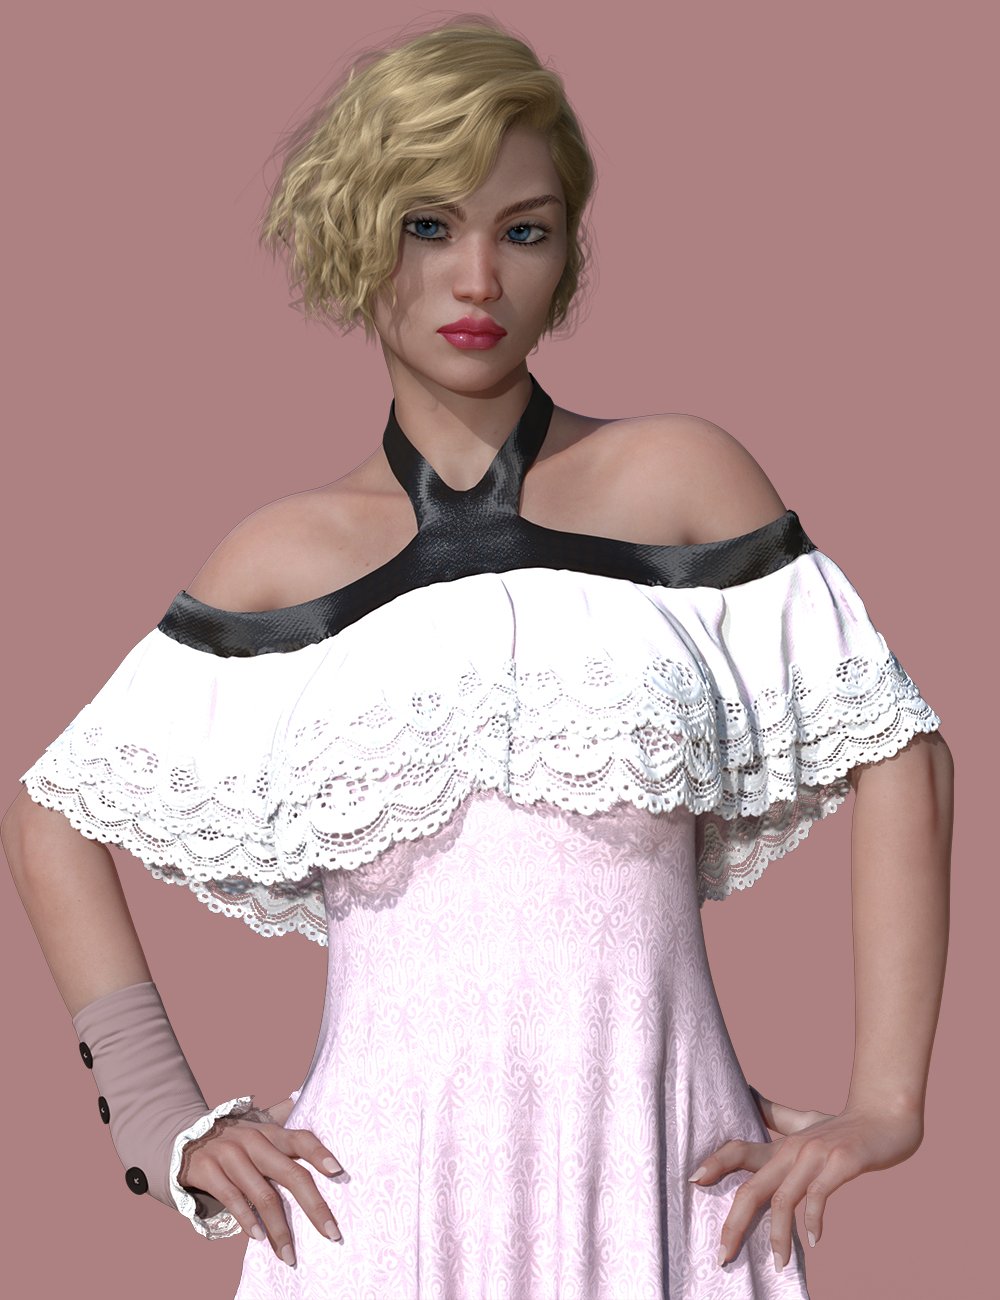 Nessalaeyn for Genesis 8 Female by: hotlilme74, 3D Models by Daz 3D